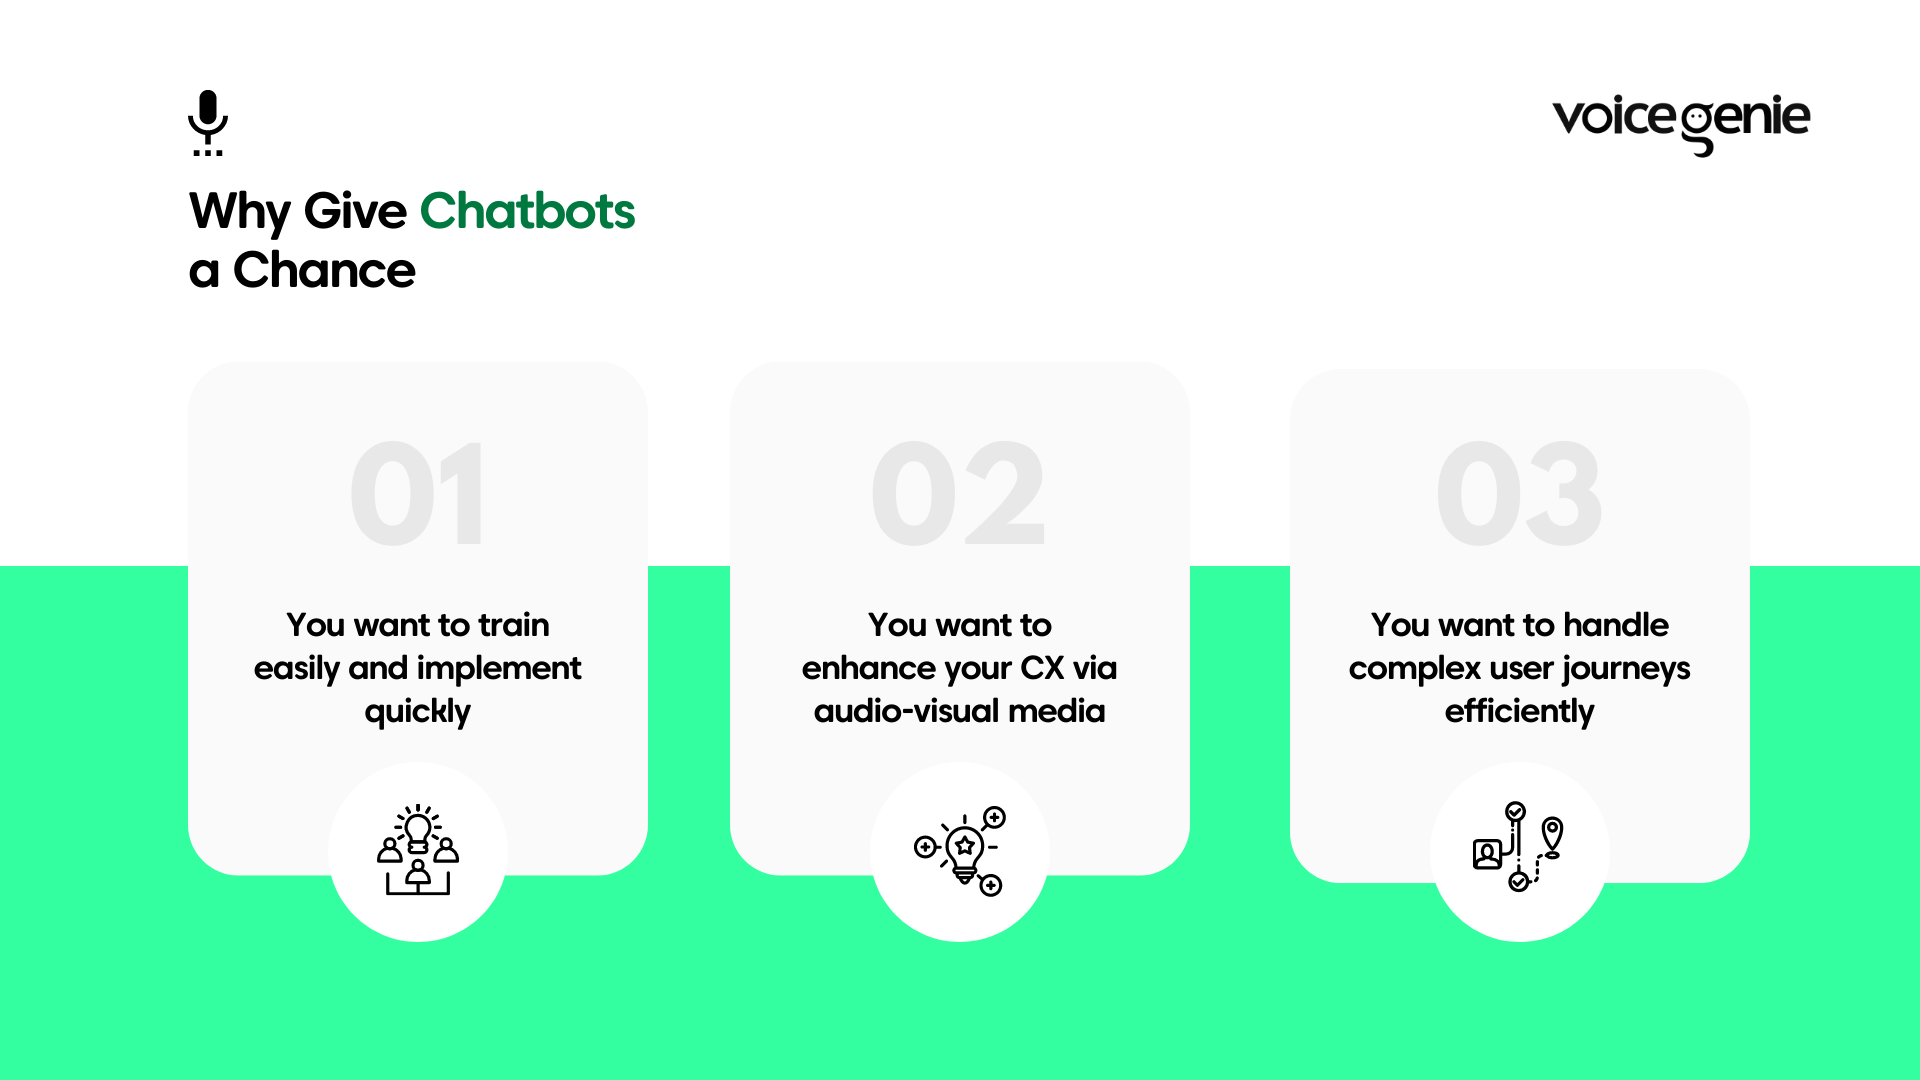 Reasons to choose a chatbot